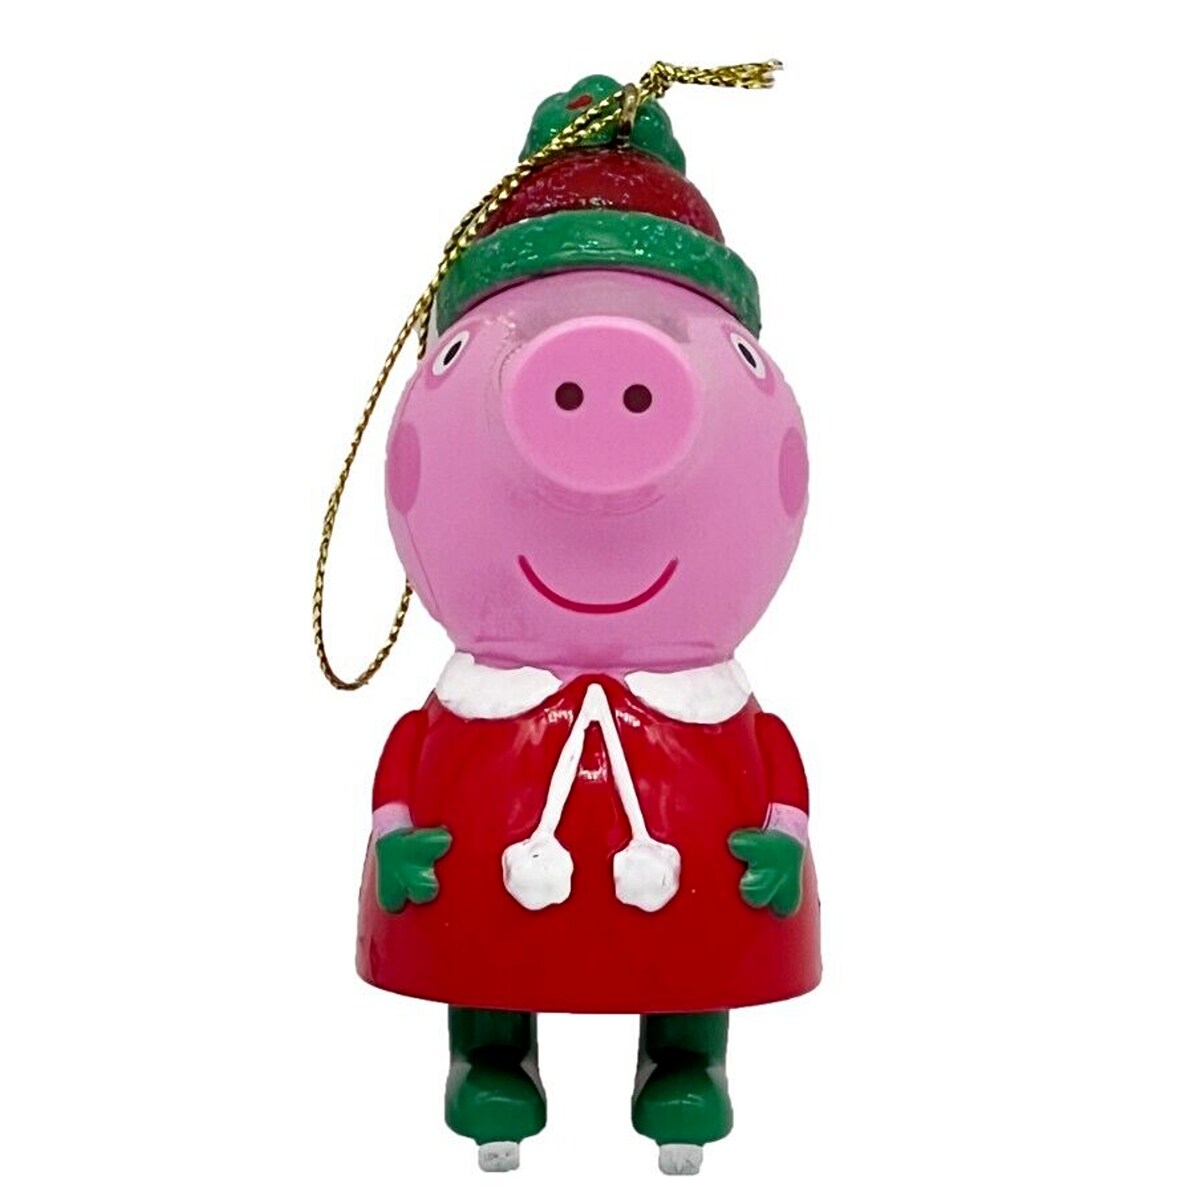 3.15 Inches Plastic Peppa Pig Christmas Ornament